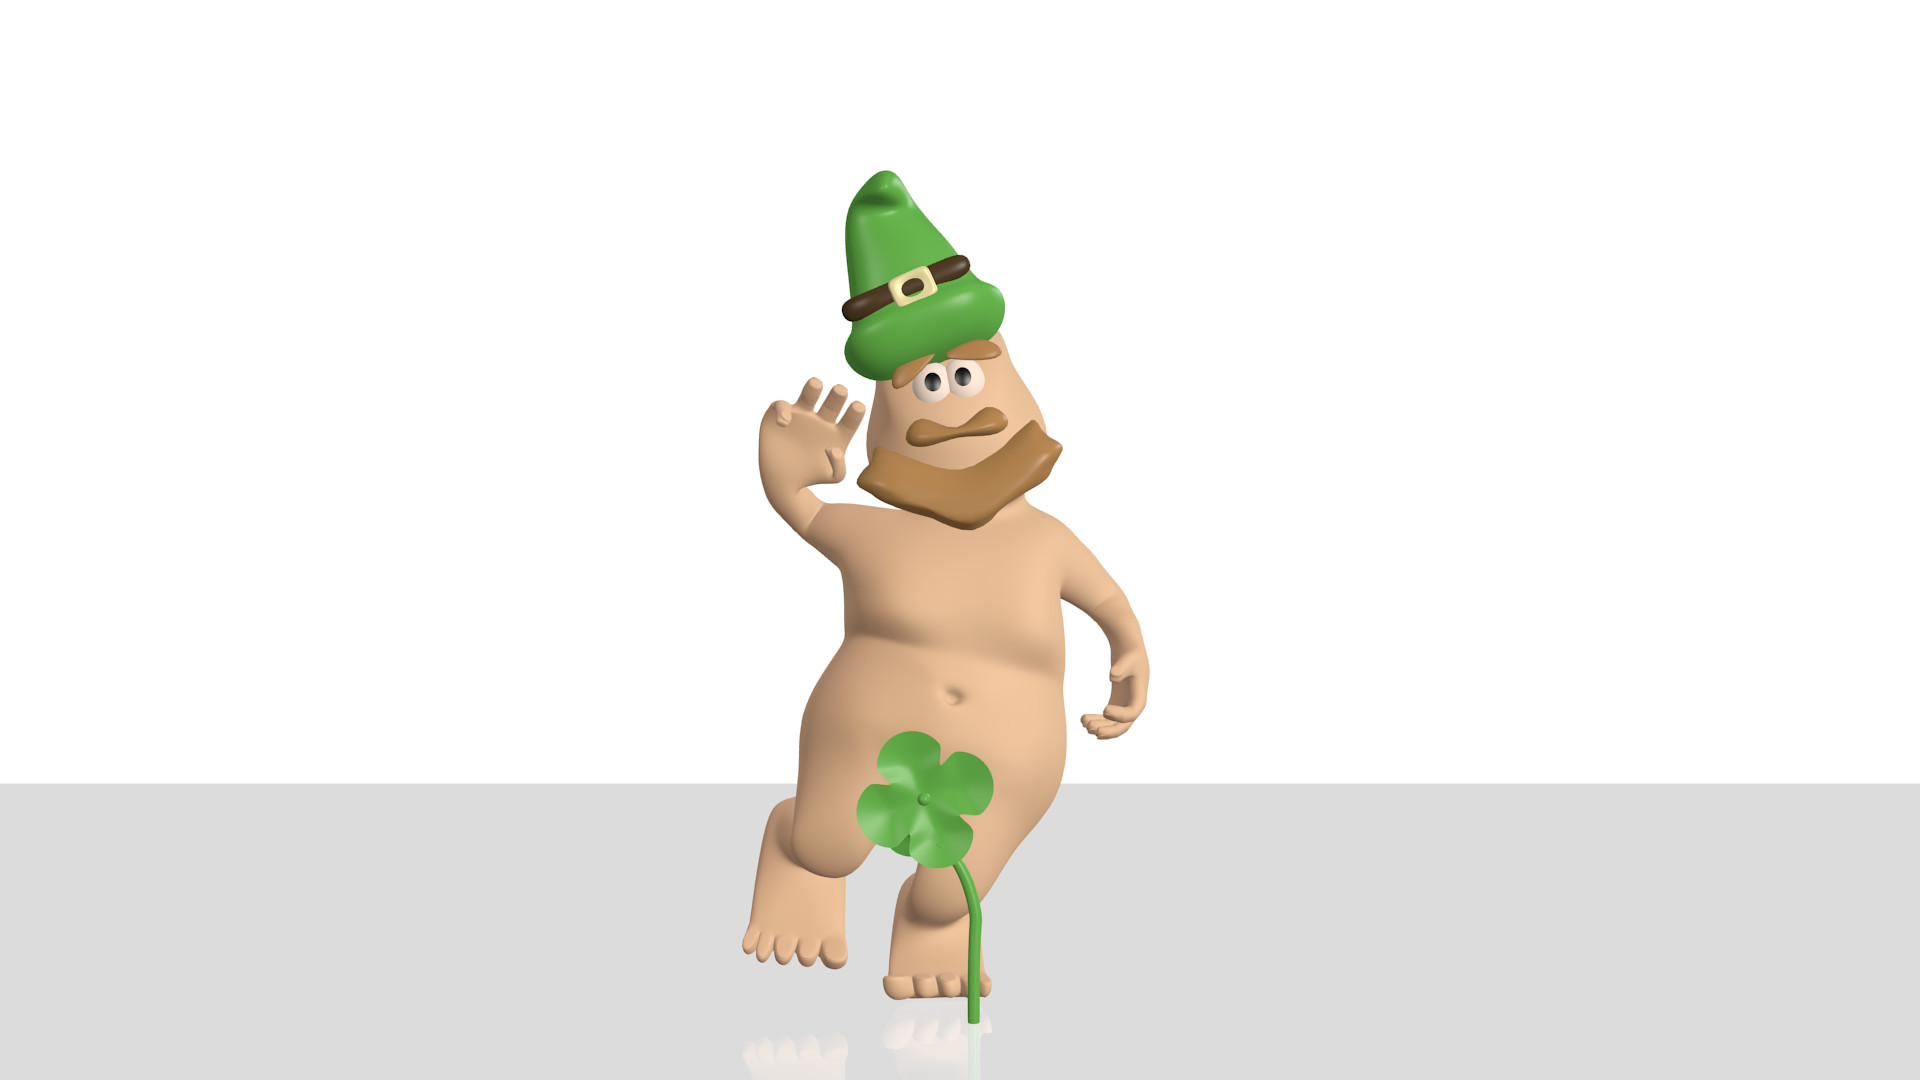 1920x1080 Happy St Patrick's Day - naked leprechaun garden gnome  http://www.shutterstock